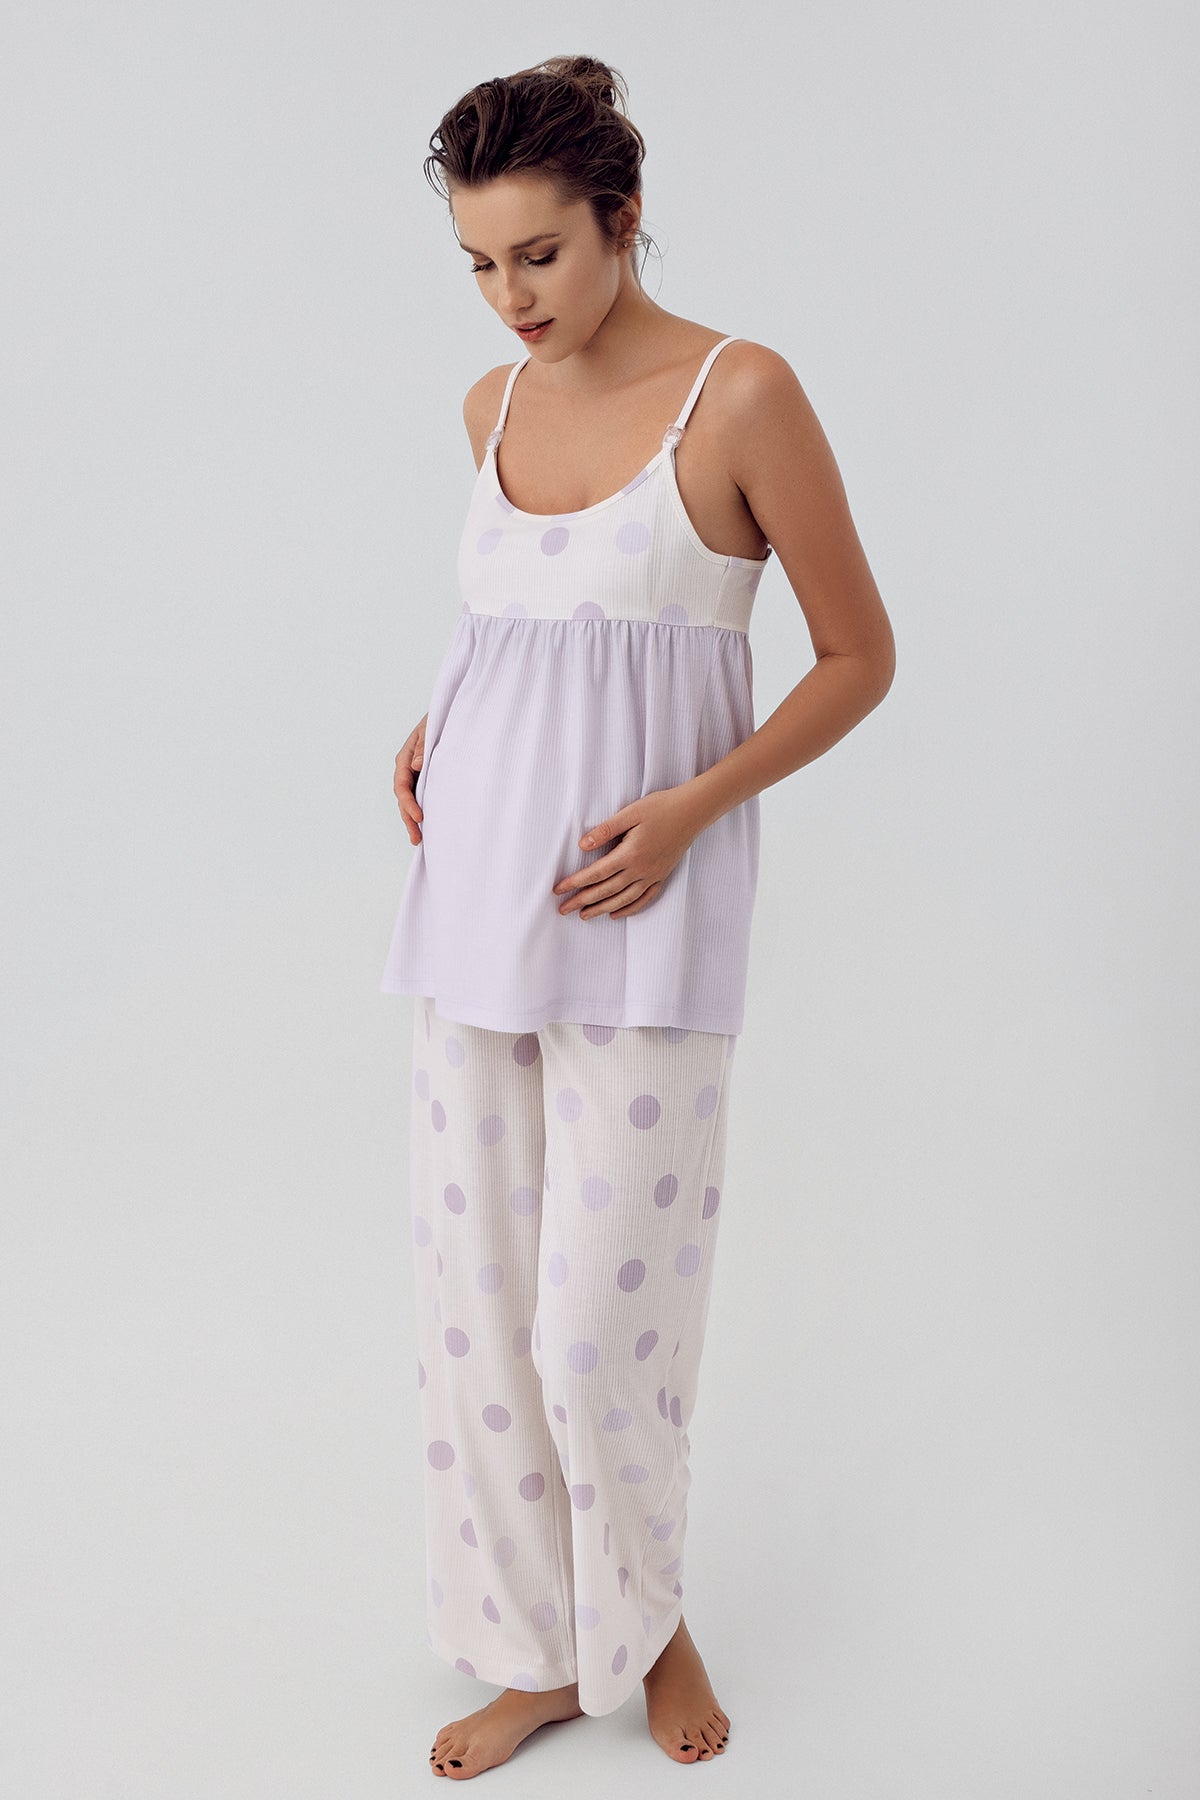 Shopymommy 401201 Polka Dot 4 Pieces Maternity & Nursing Set Lilac